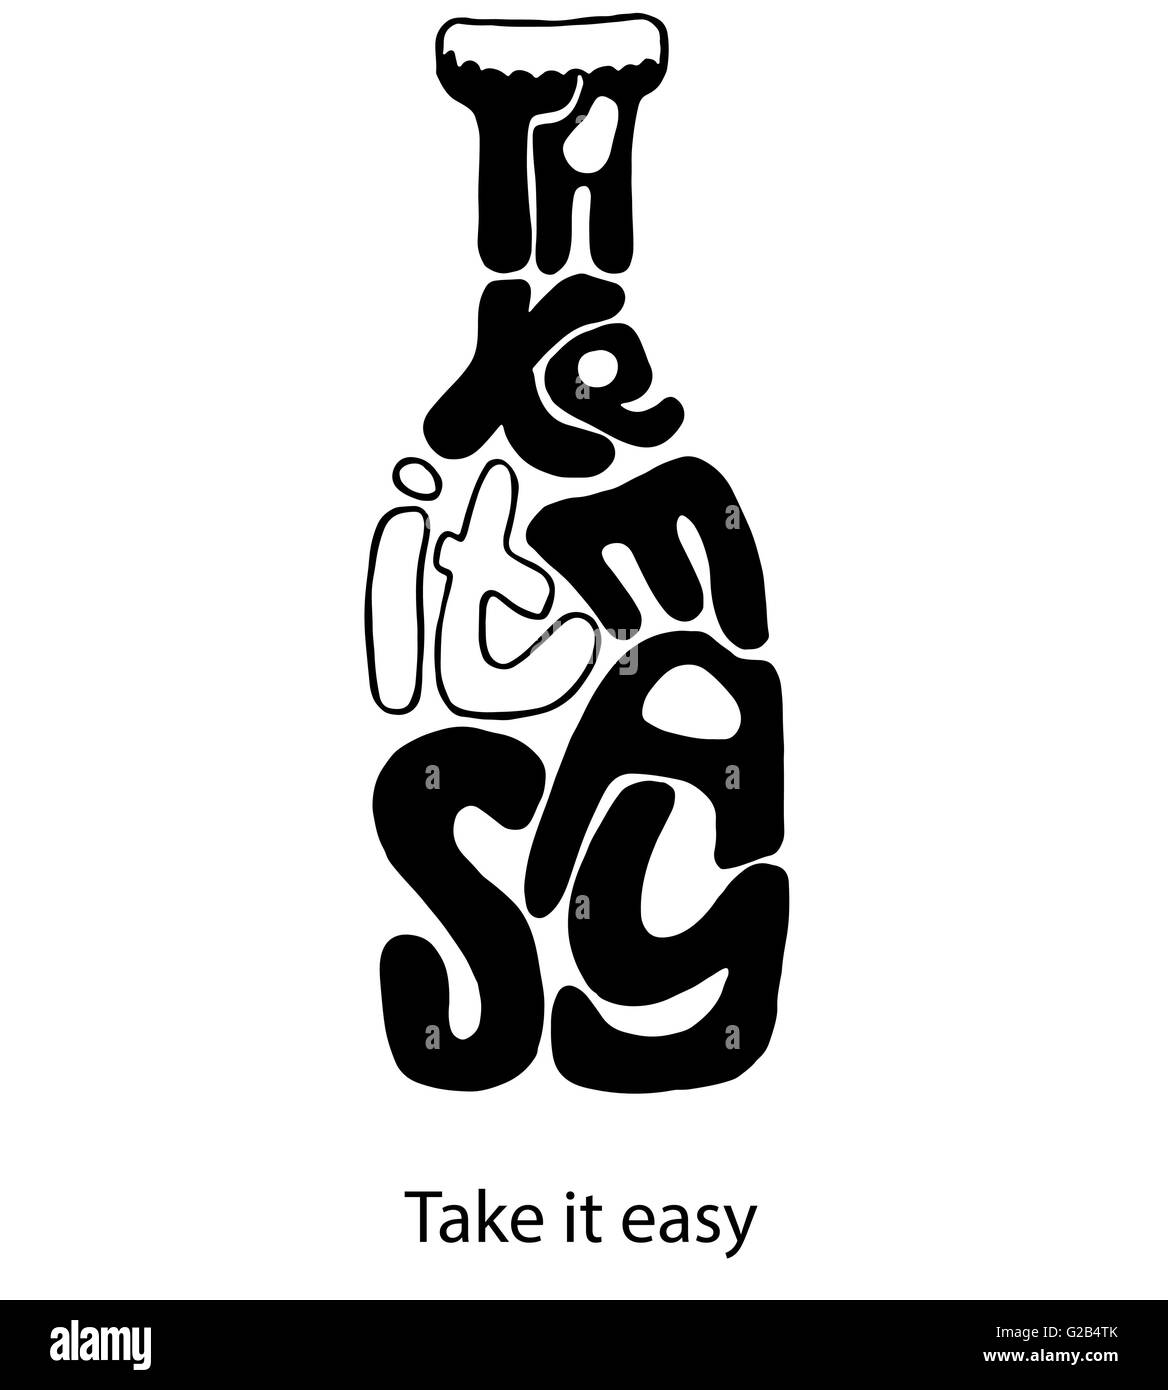 Take it easy. Inspiration illustration. Stock Vector